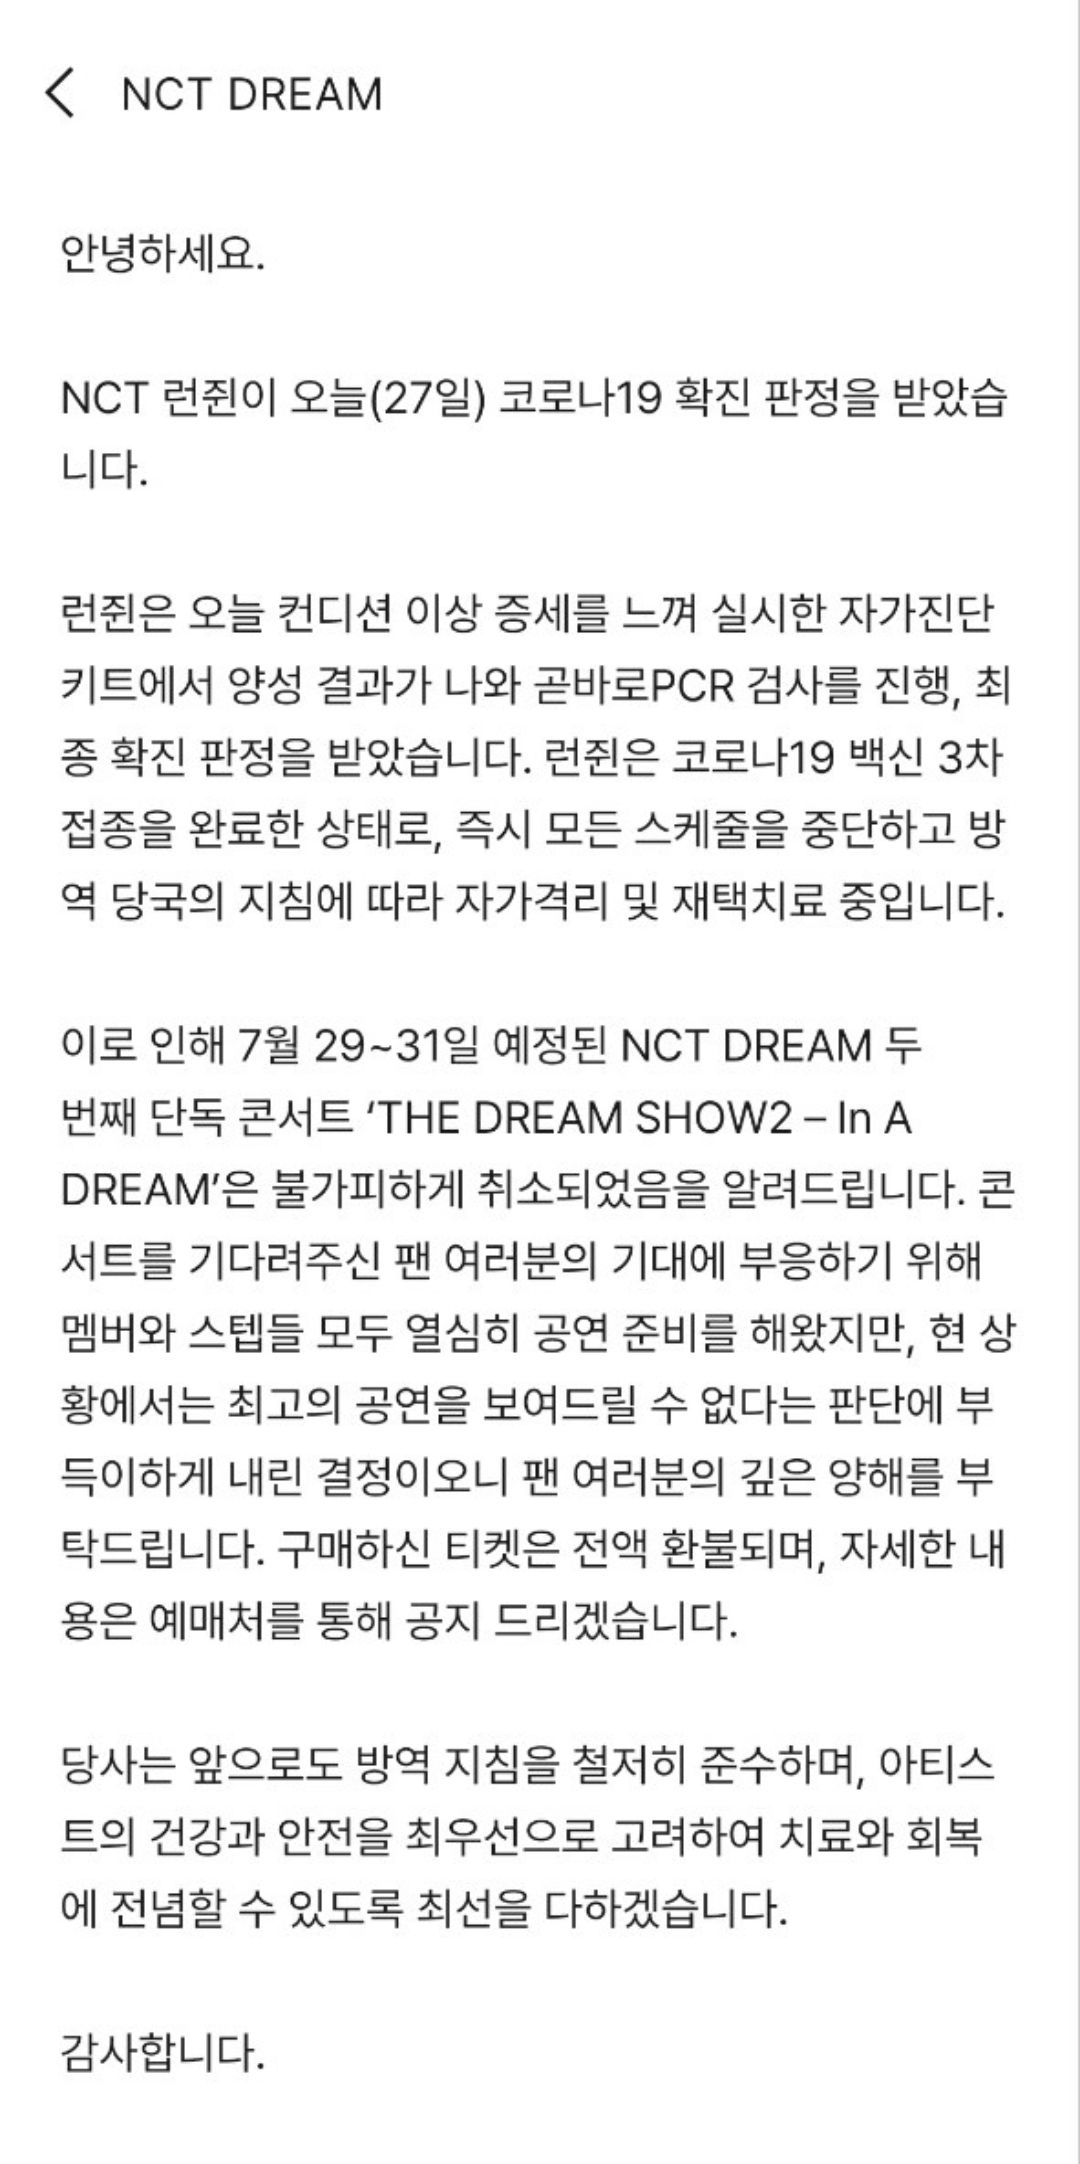 Pengumuman pembatalan konser NCT DREAM./SM Entertainment